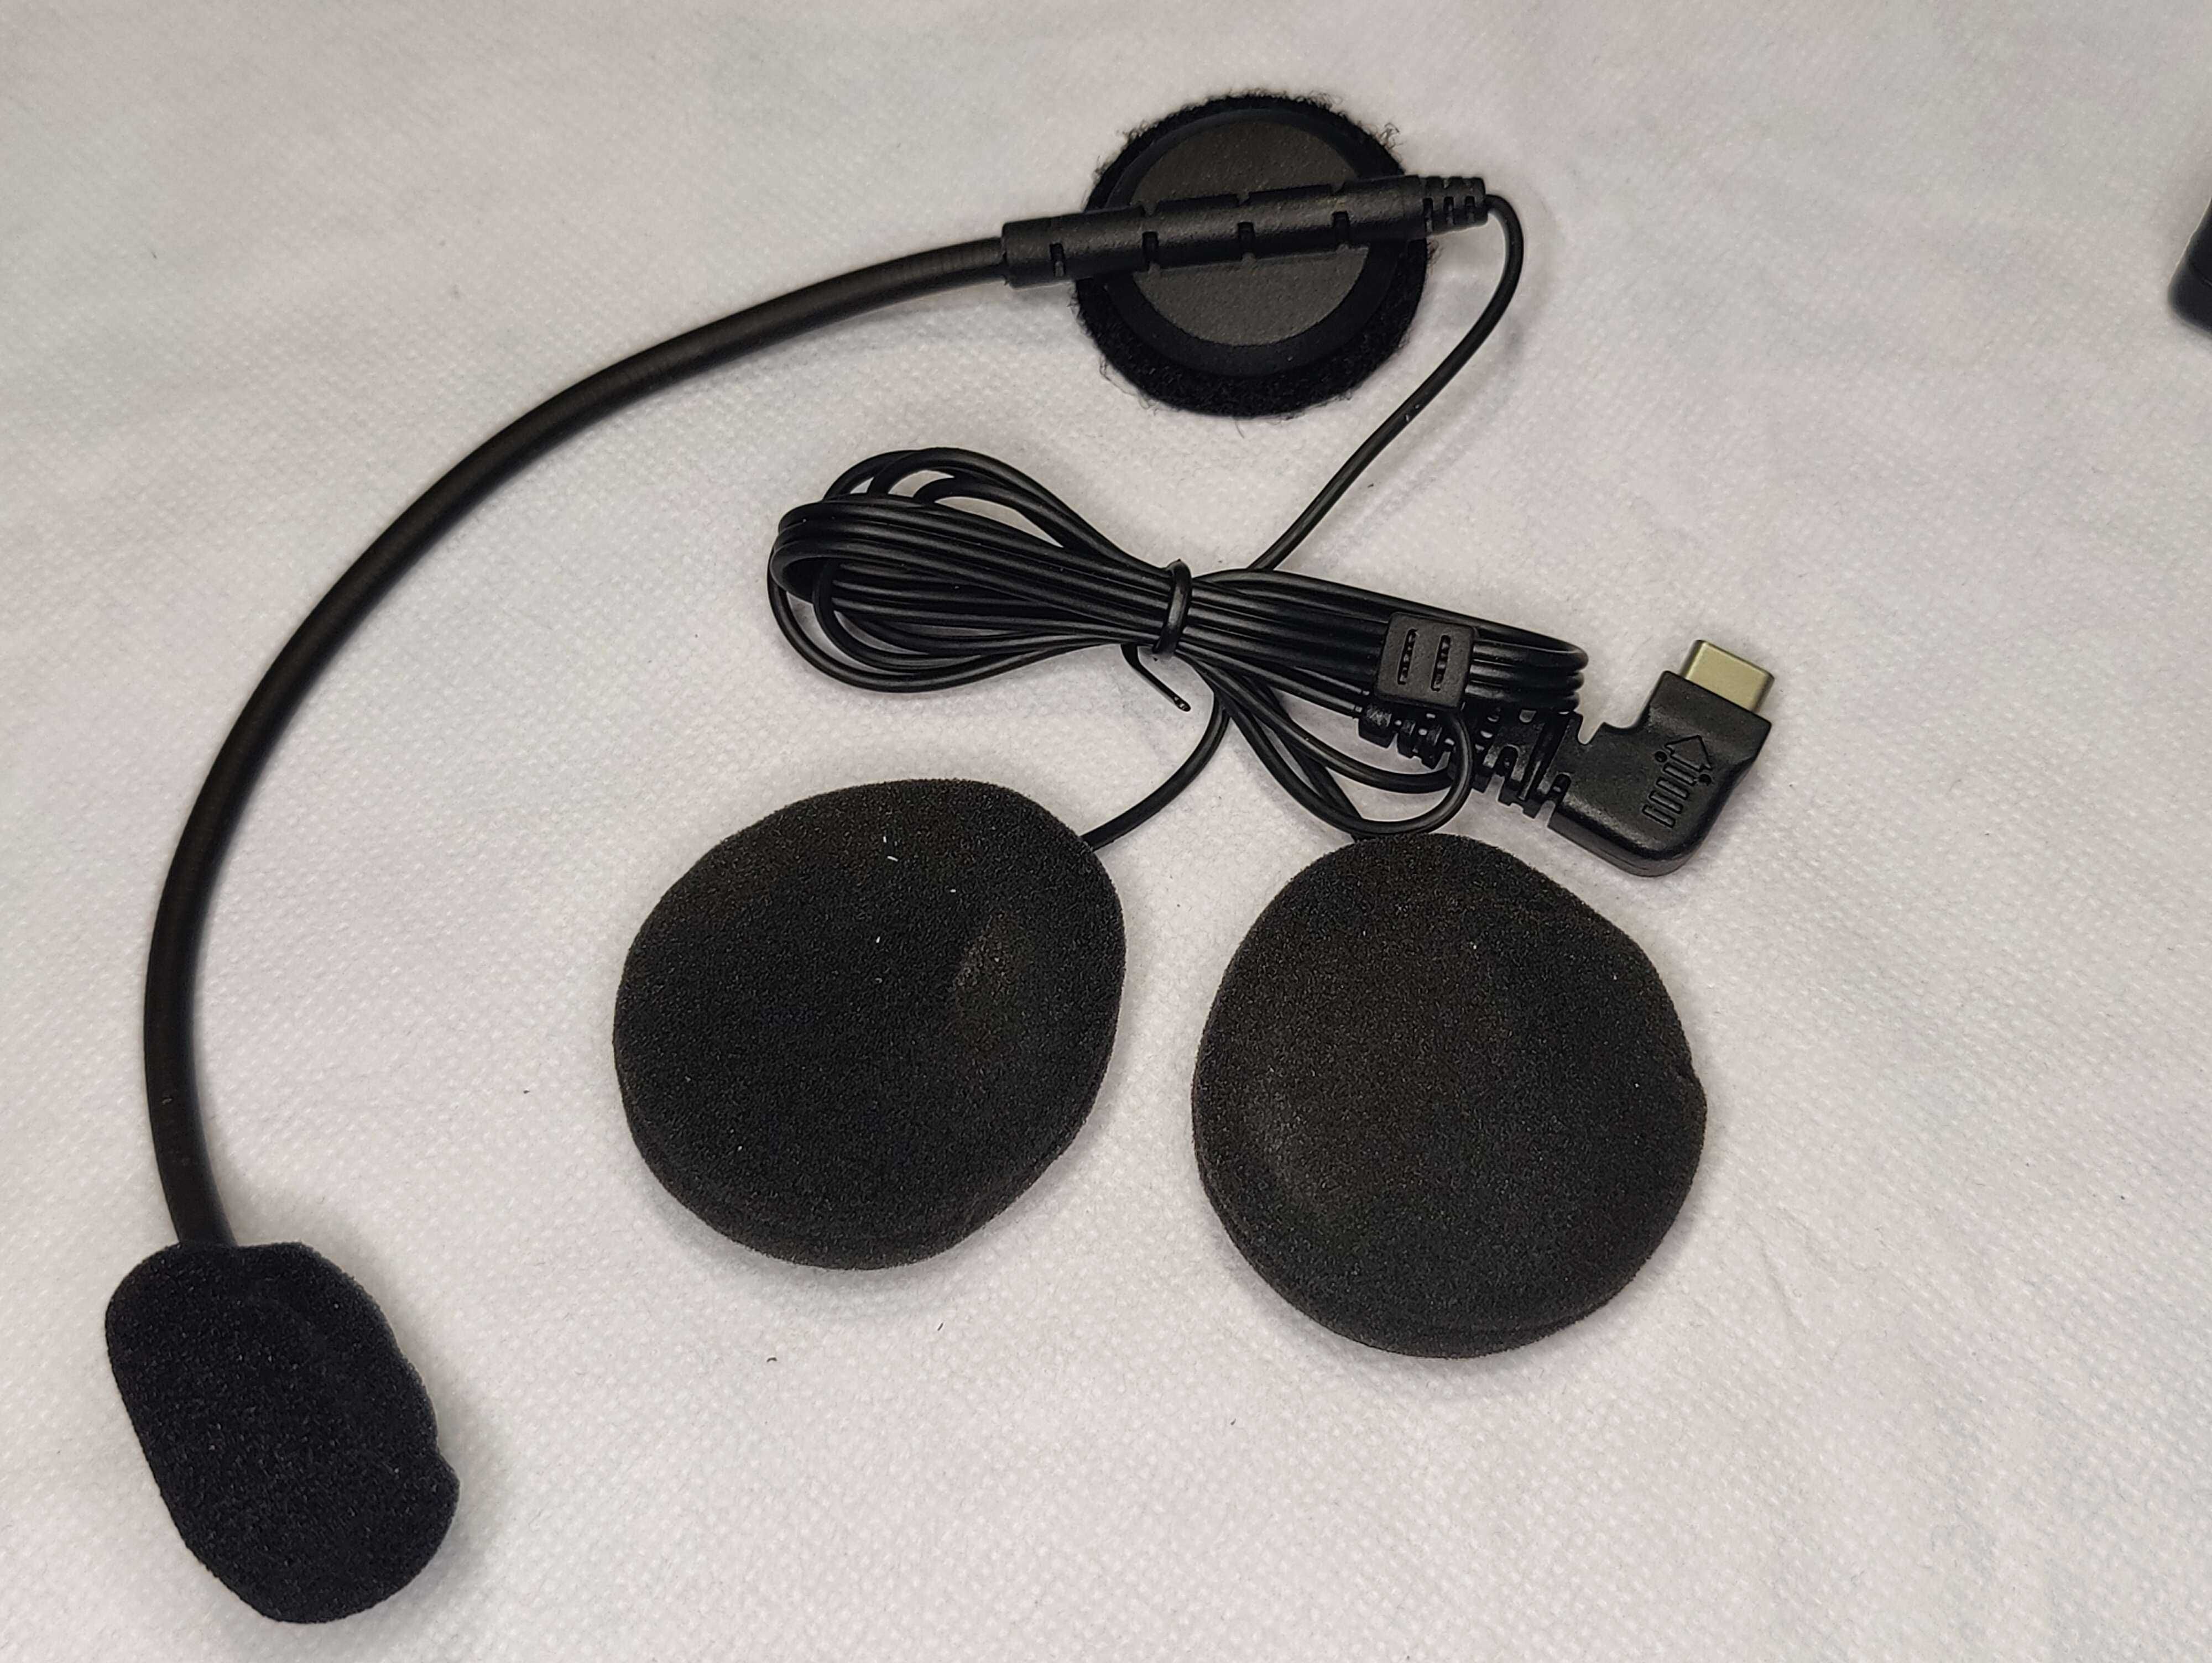 ORIGINAL - Intercomunicadores Auricular Capacete Moto, Bluetooth BT-S2